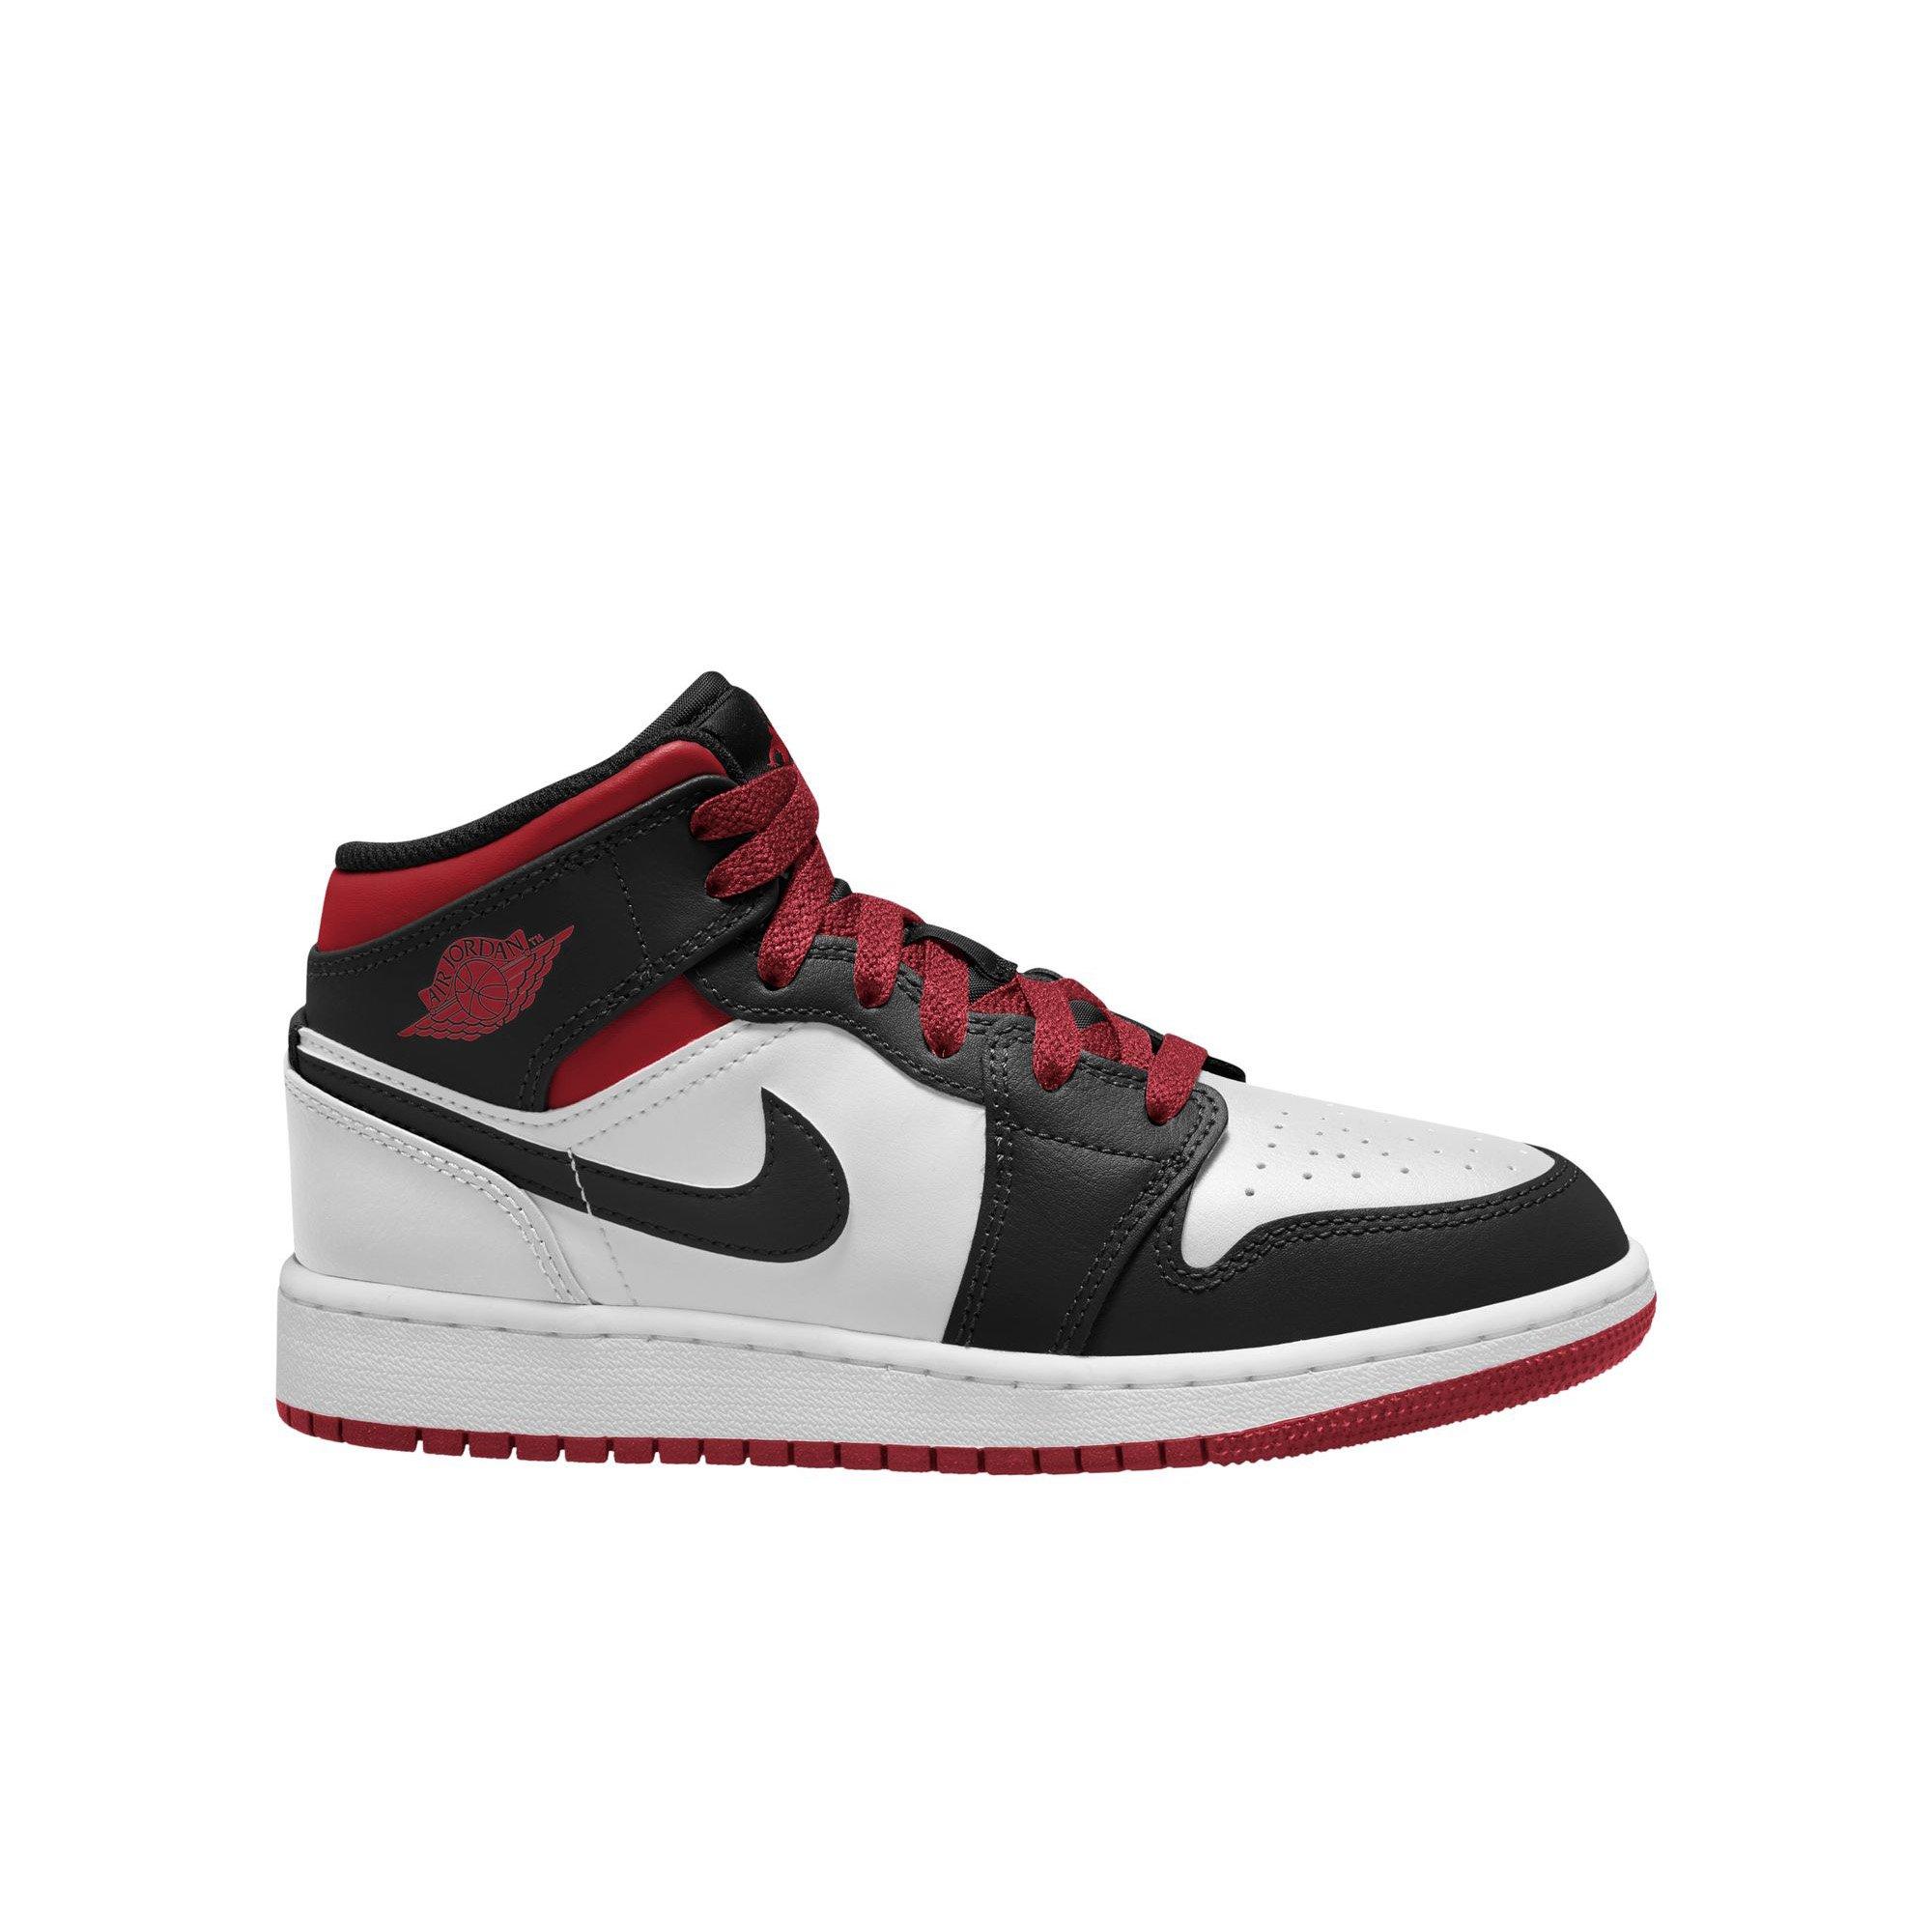 Jordan 1 Low SE Gym Red/Cement Grey/Black/White Women's Shoe - Hibbett